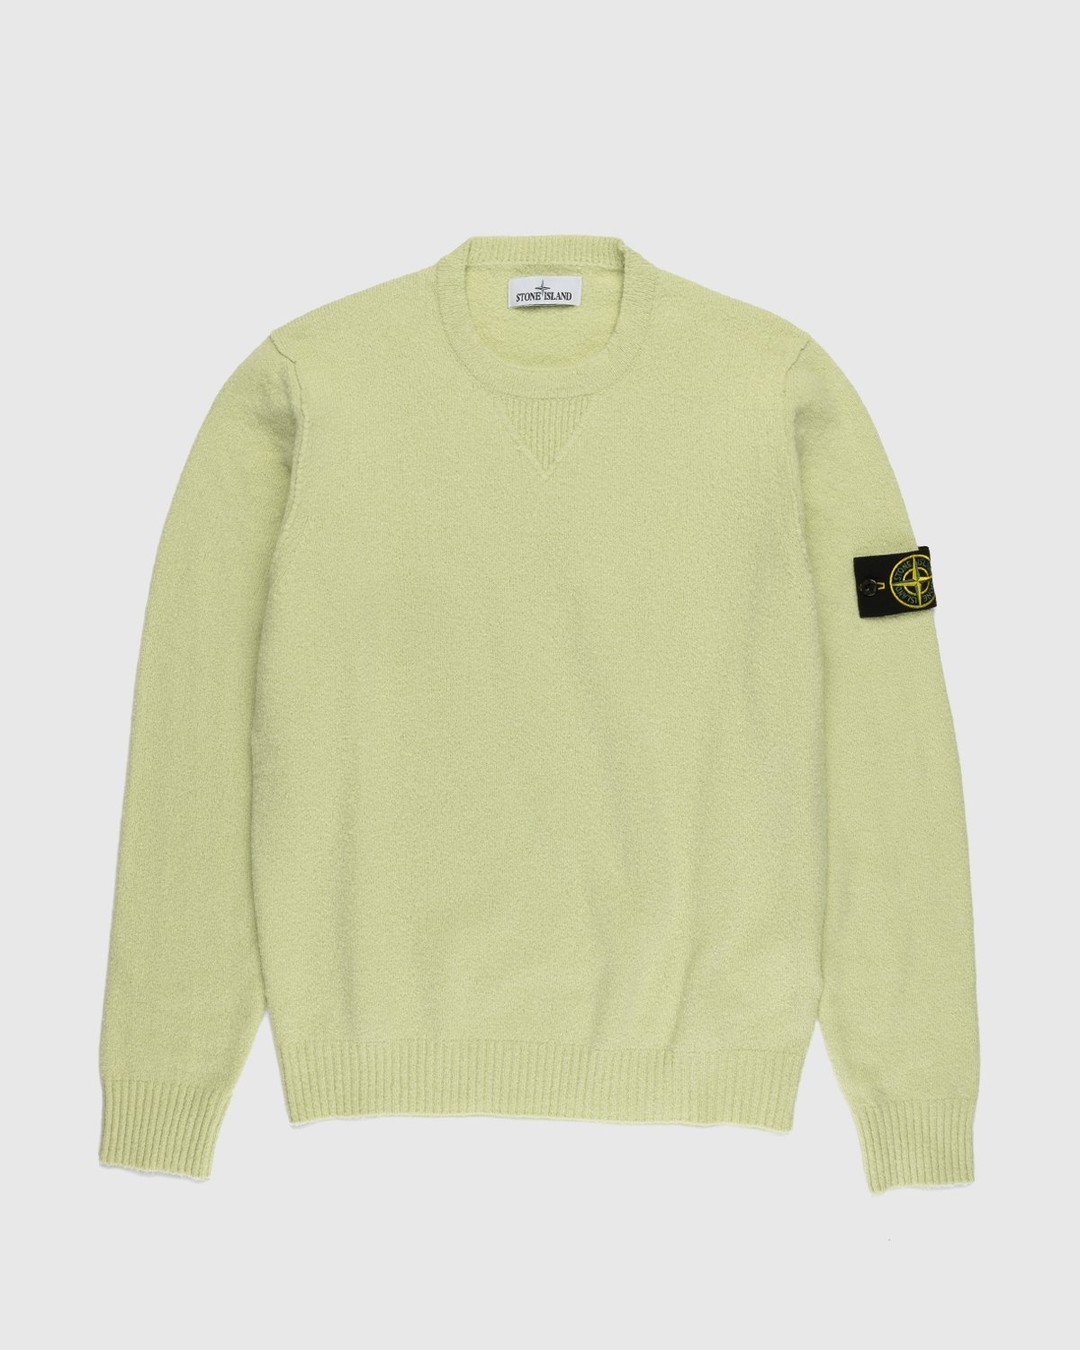 Stone Island – 548D2 Stockinette Stitch Sweater Light Green - Knitwear - Green - Image 1